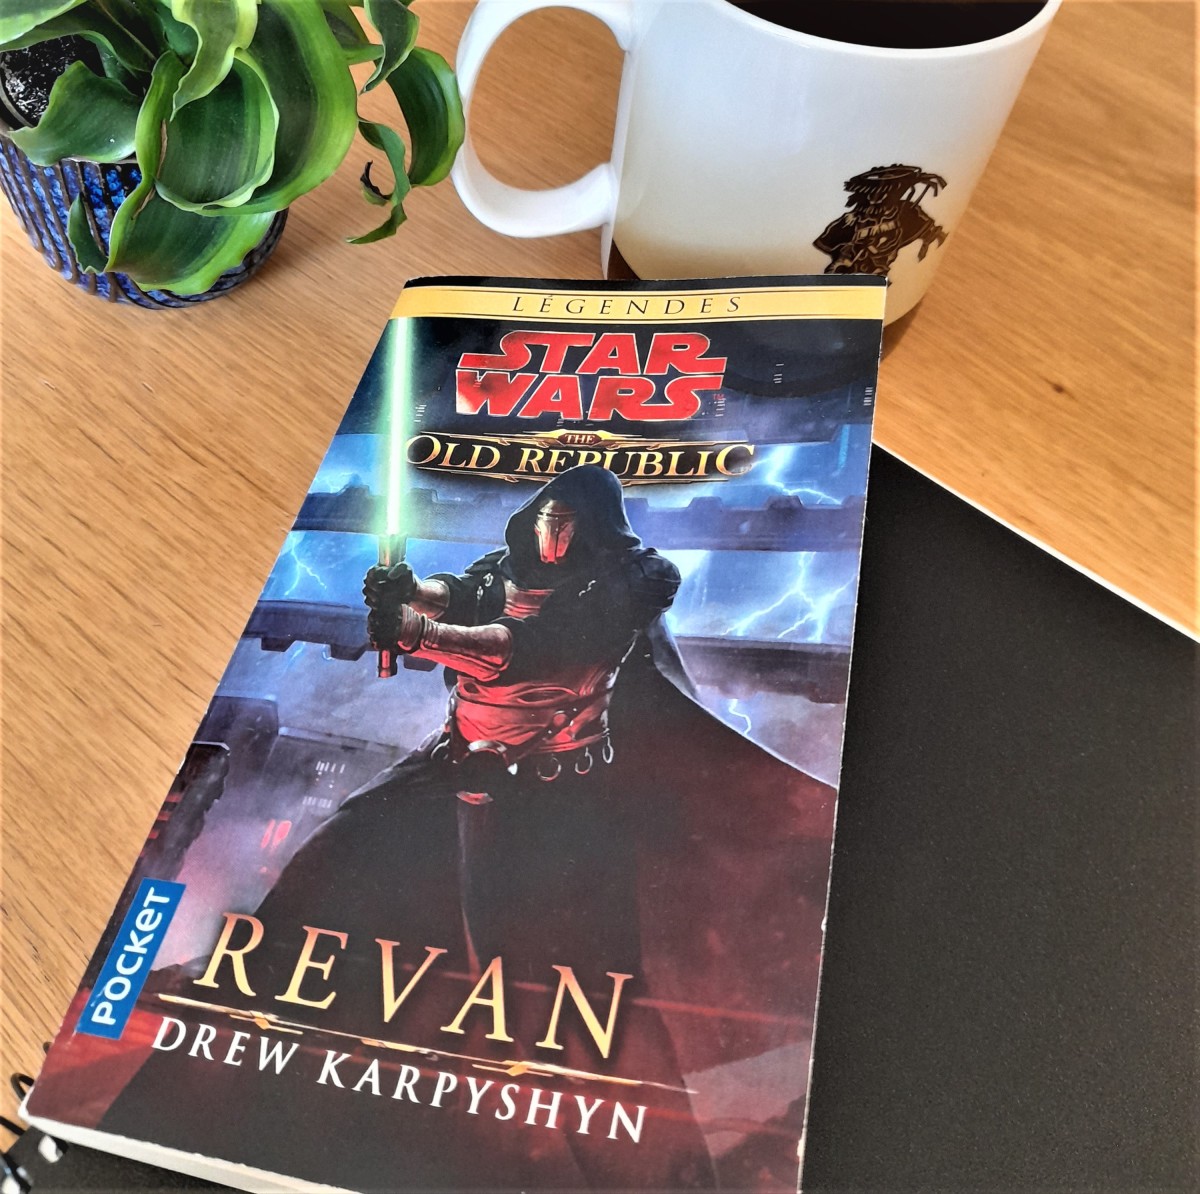 Star Wars : The Old Republic #1 Revan (2011), Drew Karpyshyn